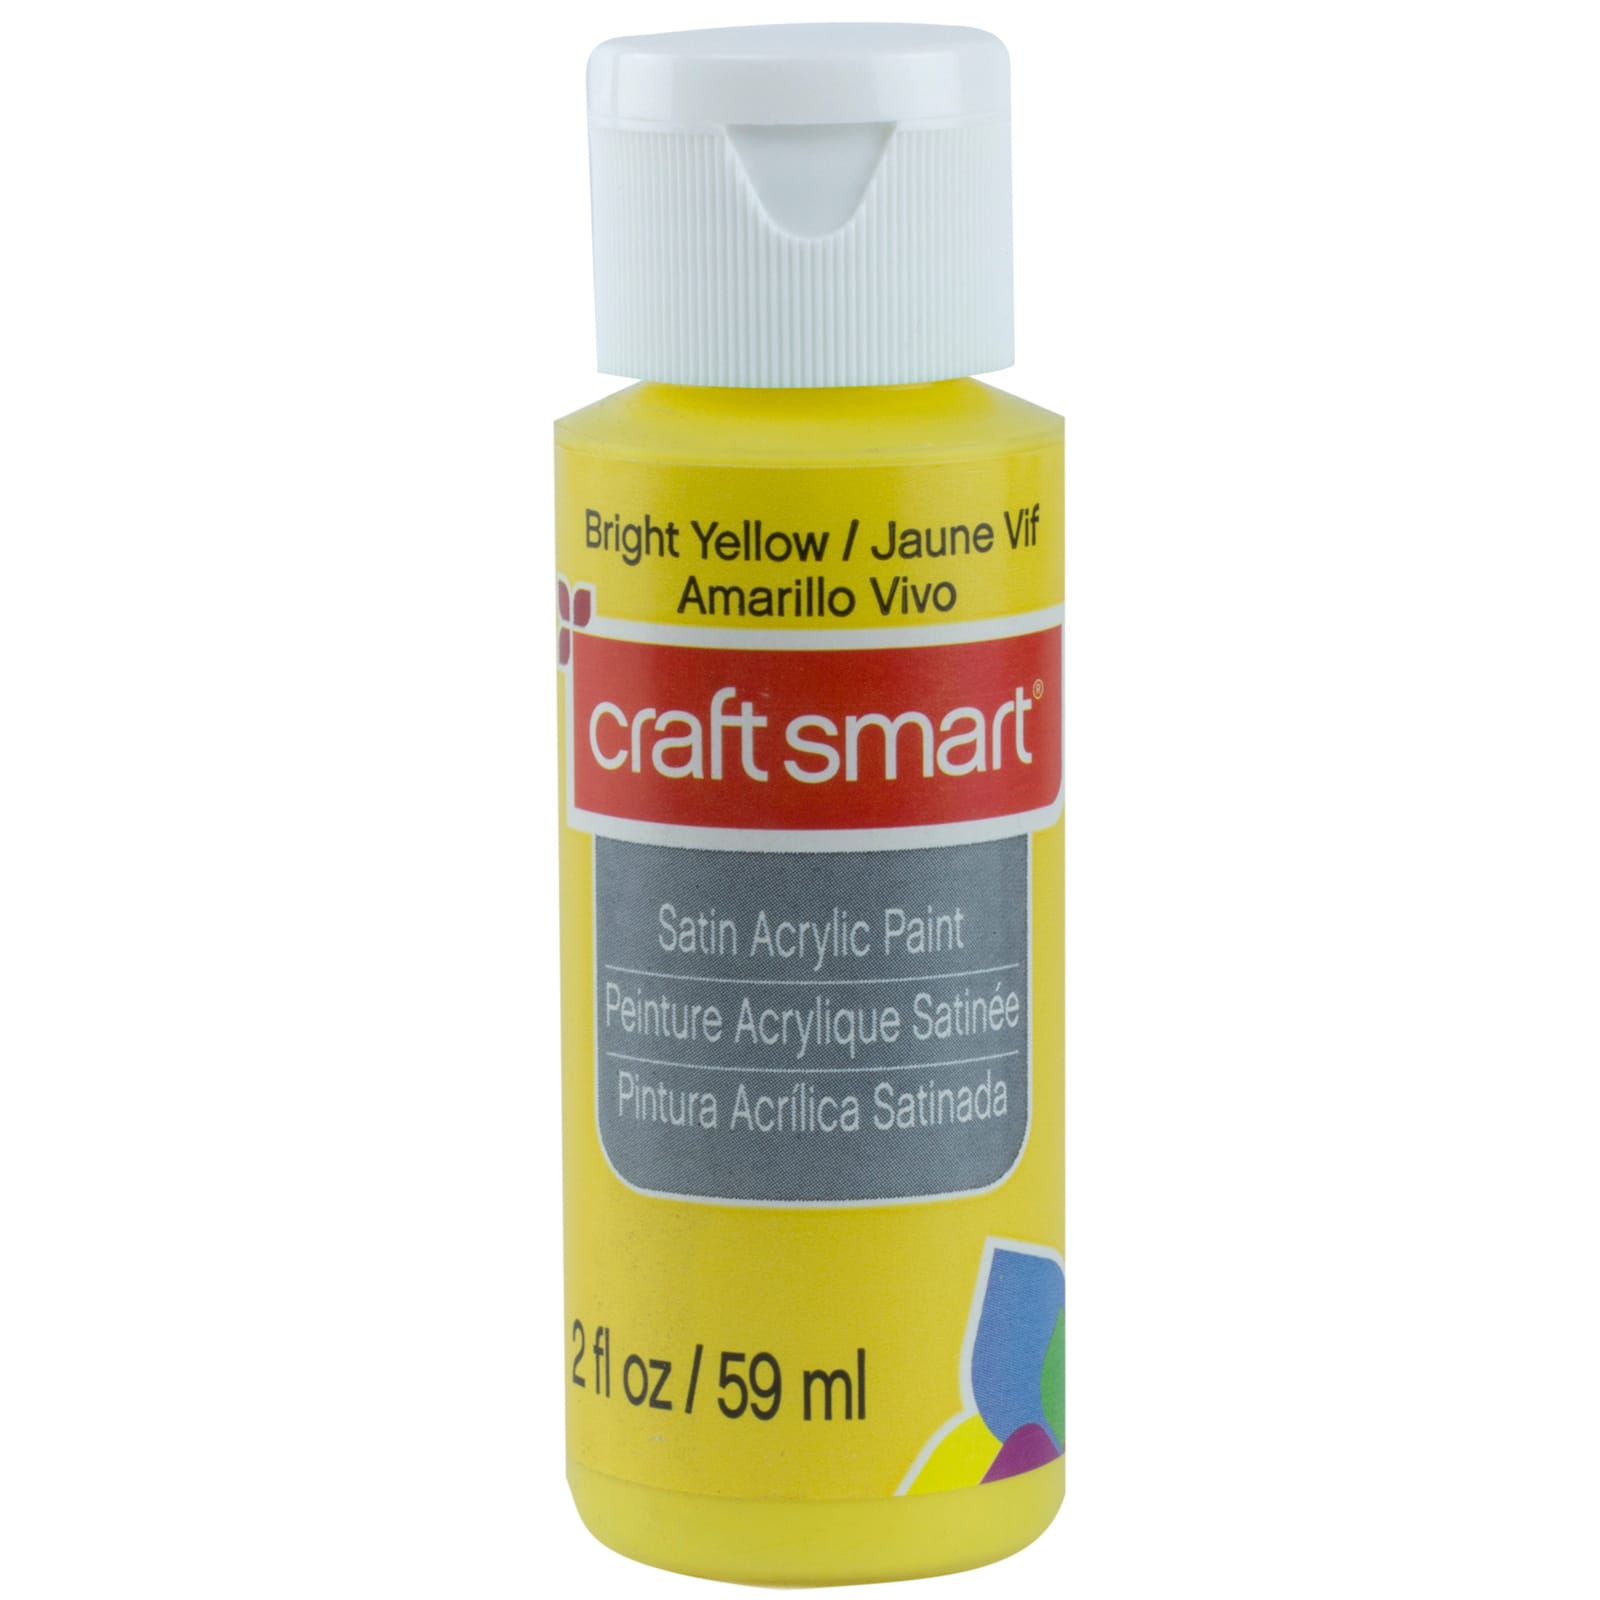  Craft Smart Acrylic Paint 2 Fl.oz. 1 Bottle Black : Arts,  Crafts & Sewing